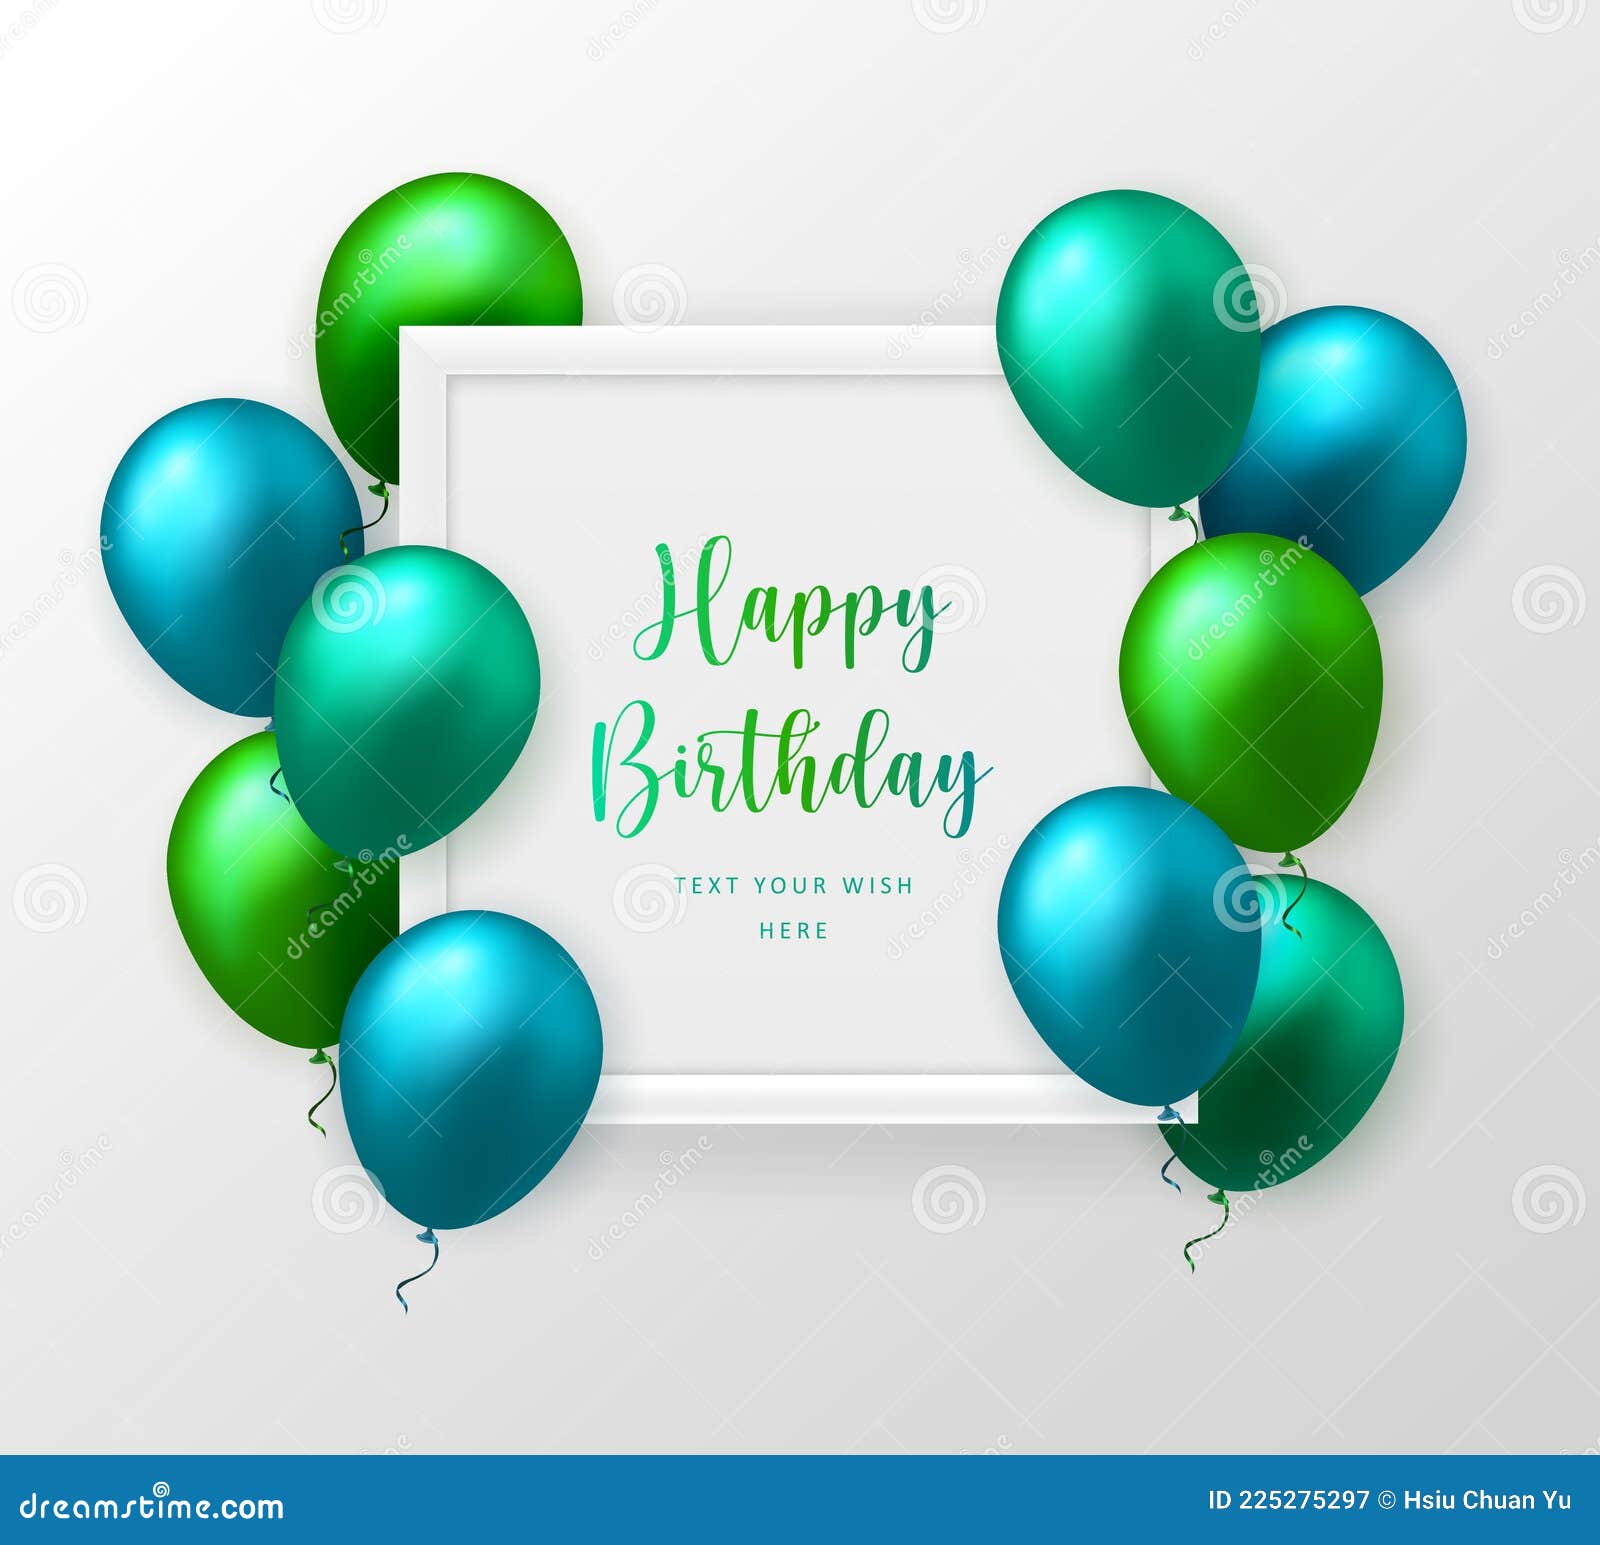 https://thumbs.dreamstime.com/z/d-realistic-emerald-green-blue-ballon-frame-happy-birthday-celebration-card-banner-template-background-225275297.jpg